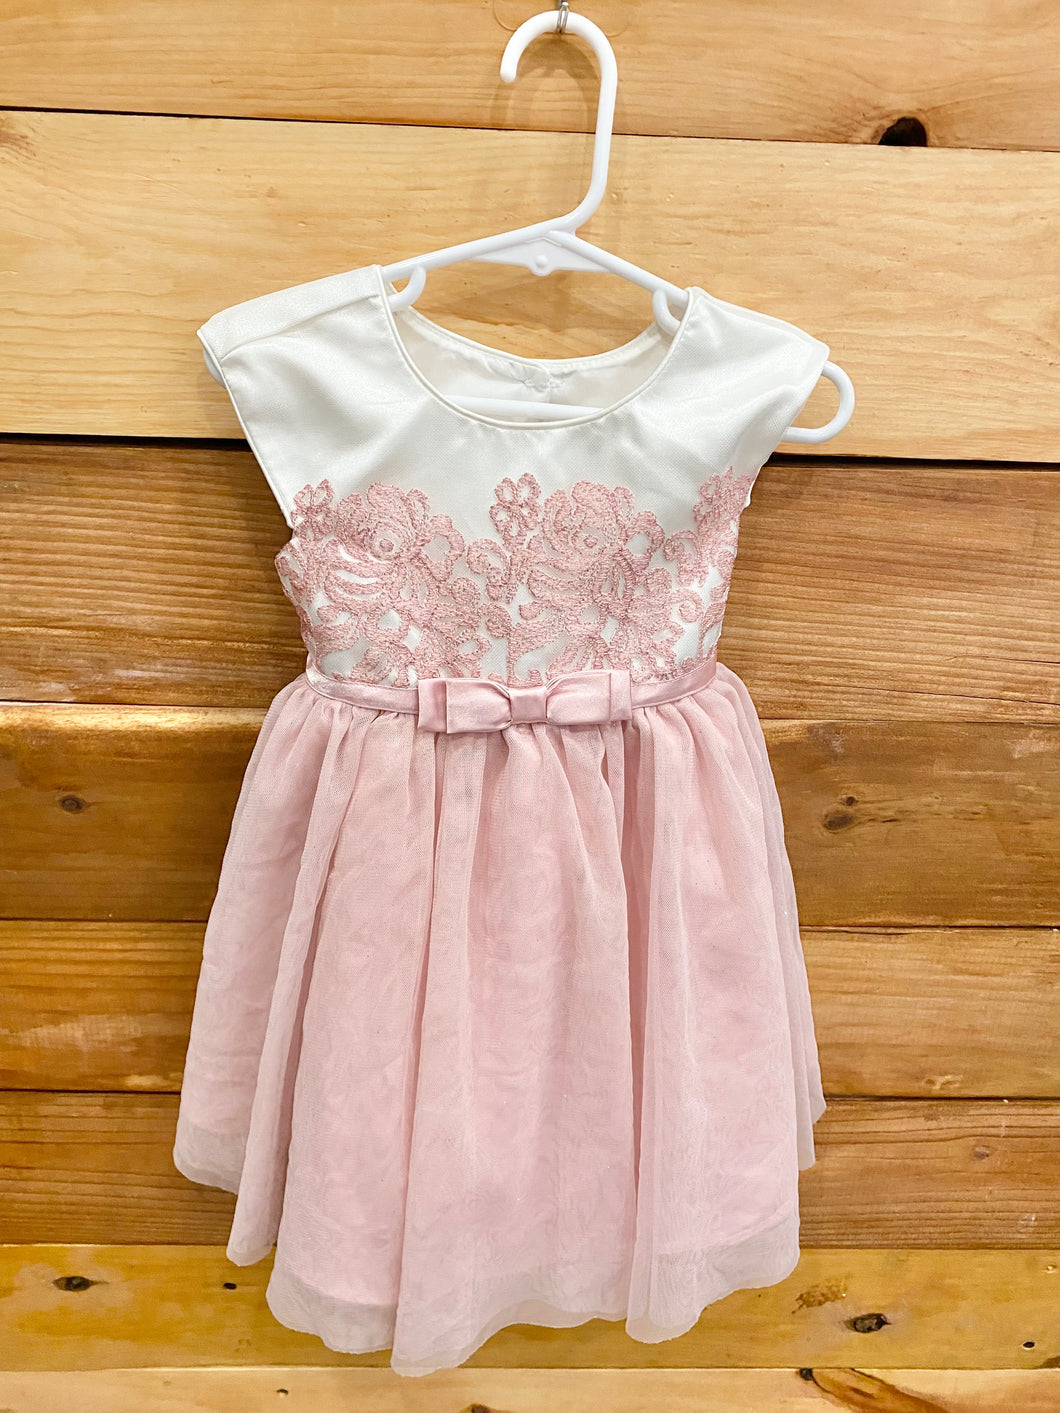 Jona Michelle Pink Tulle Dress Size 2T